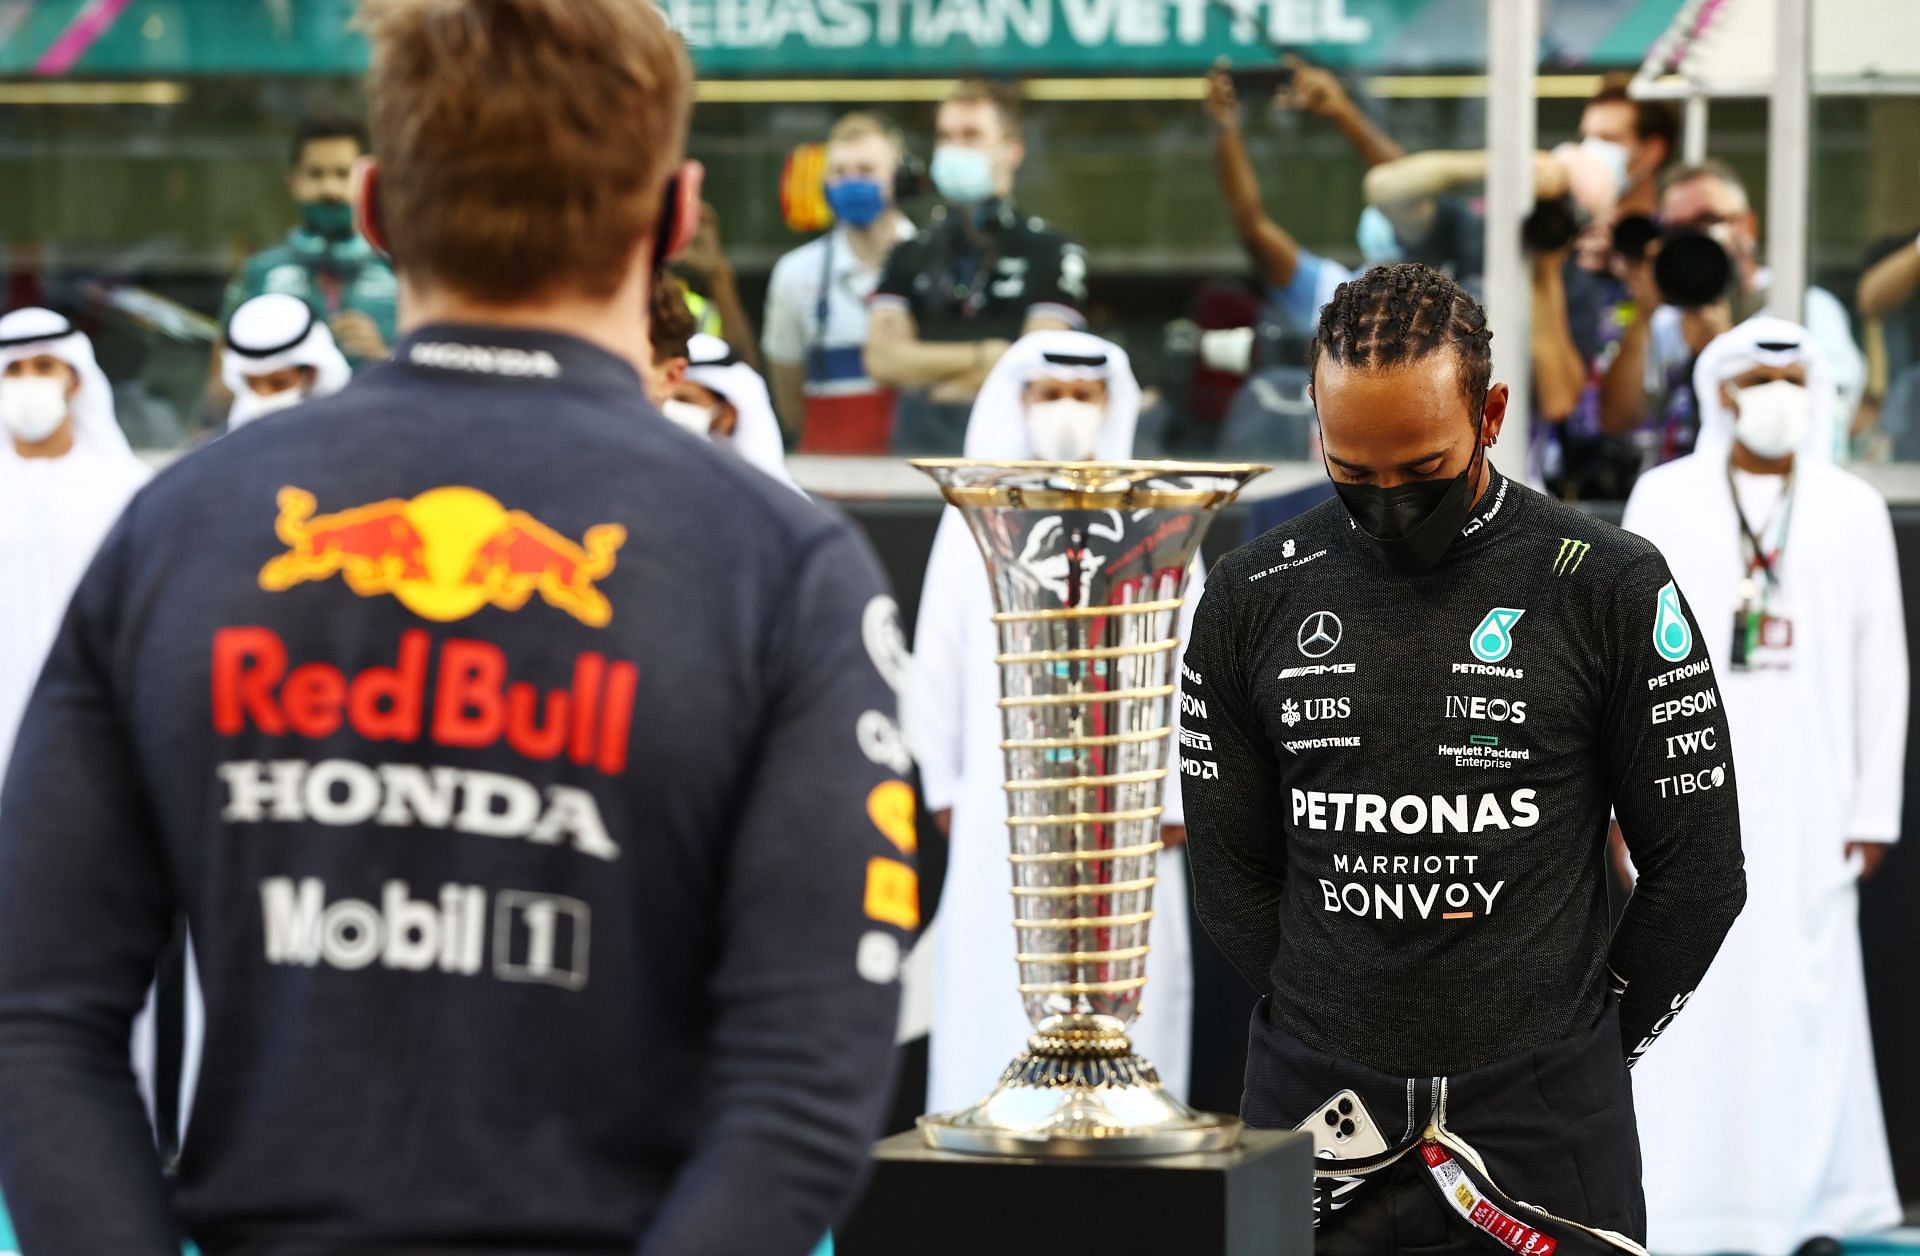 F1 Grand Prix of Abu Dhabi - Max Verstappen won the championship against rival Lewis Hamilton